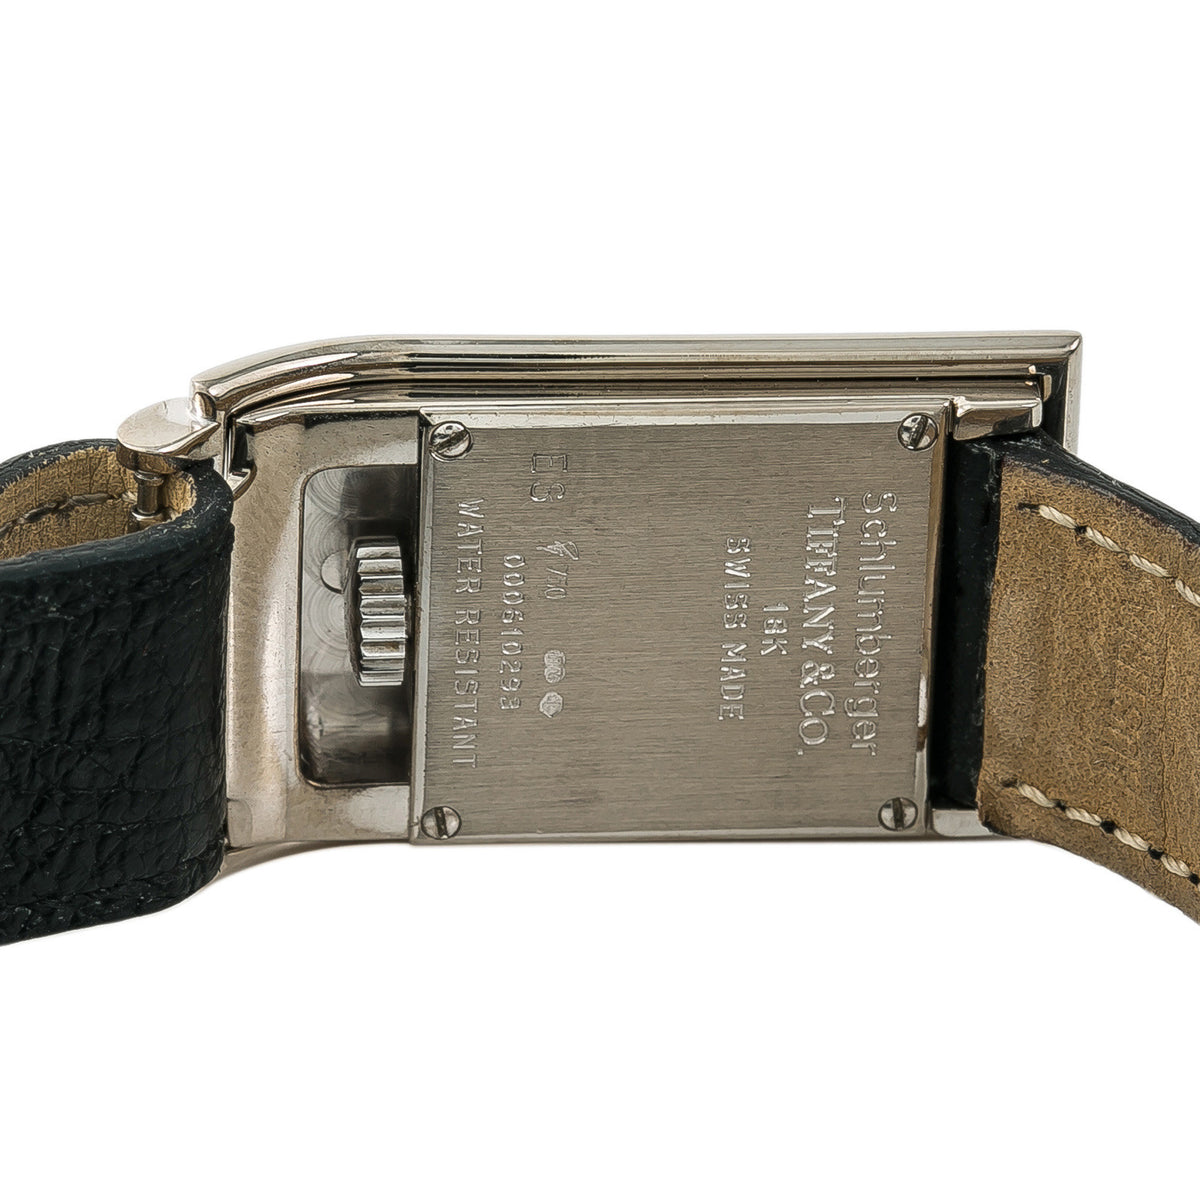 Tiffany & Co Schlumberger Silver Dial 18K White Gold Quartz Ladies Watch 23mm